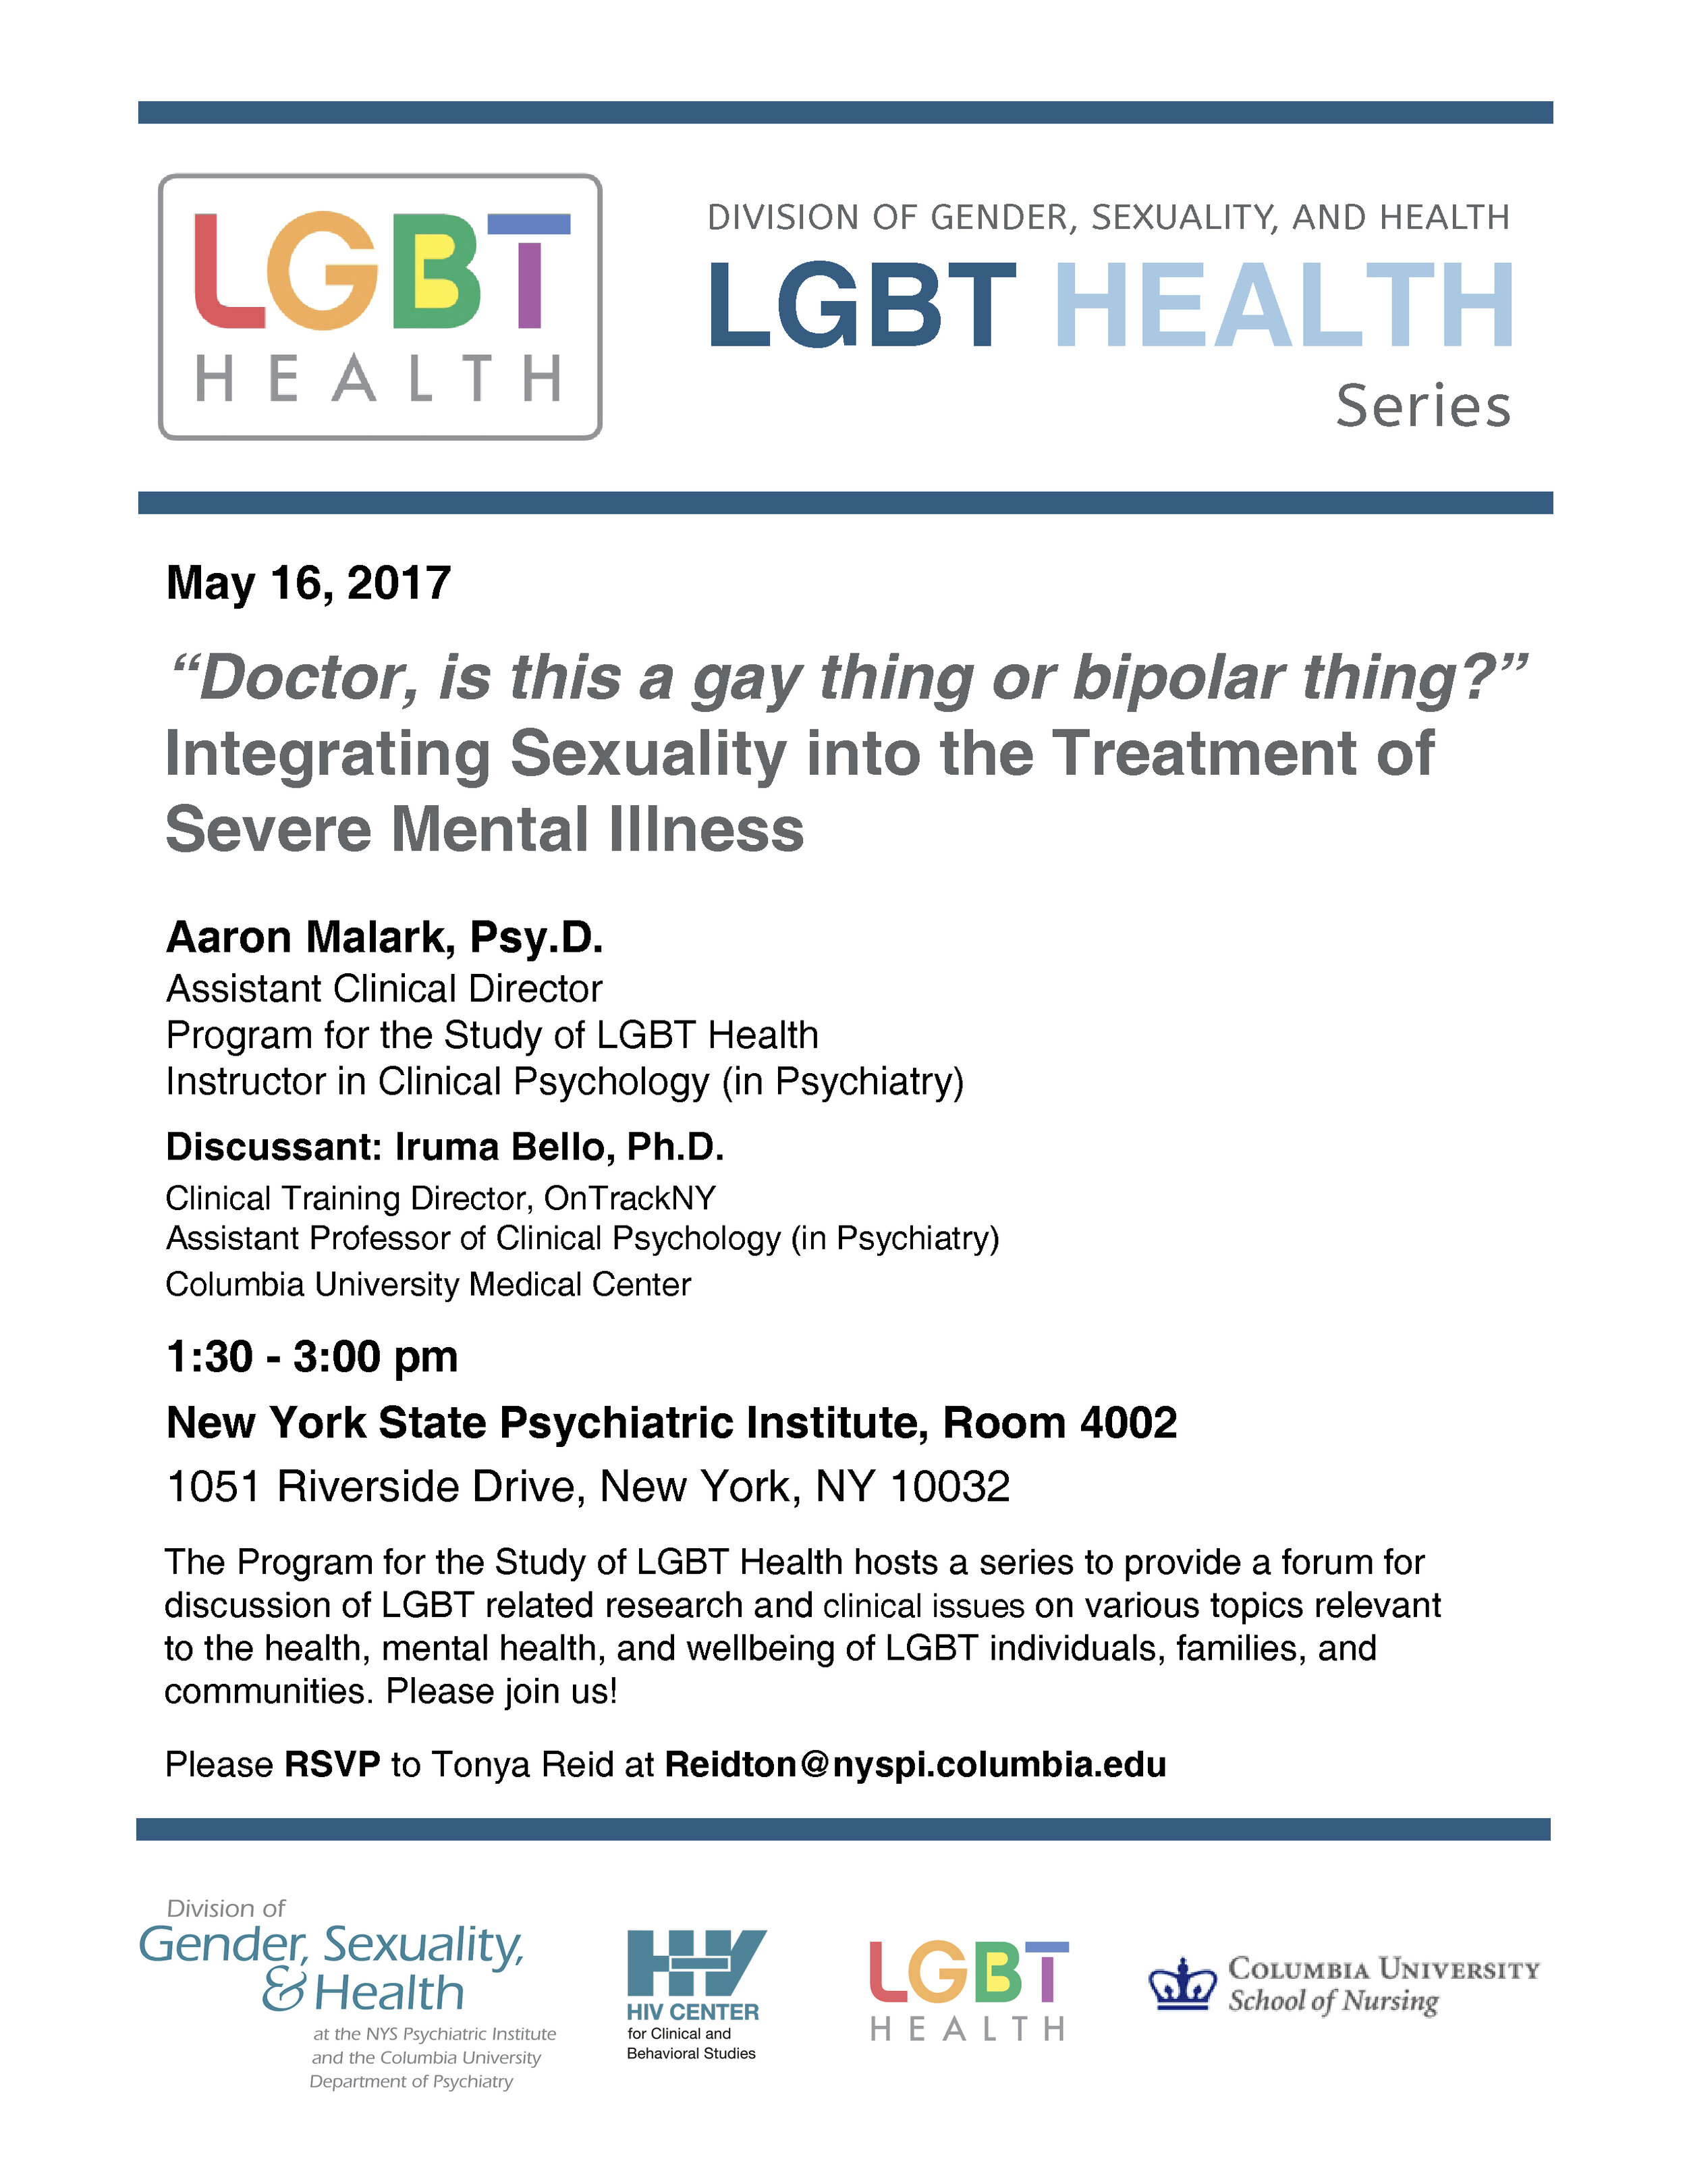 LGBT Health Series May 16 2017.jpg